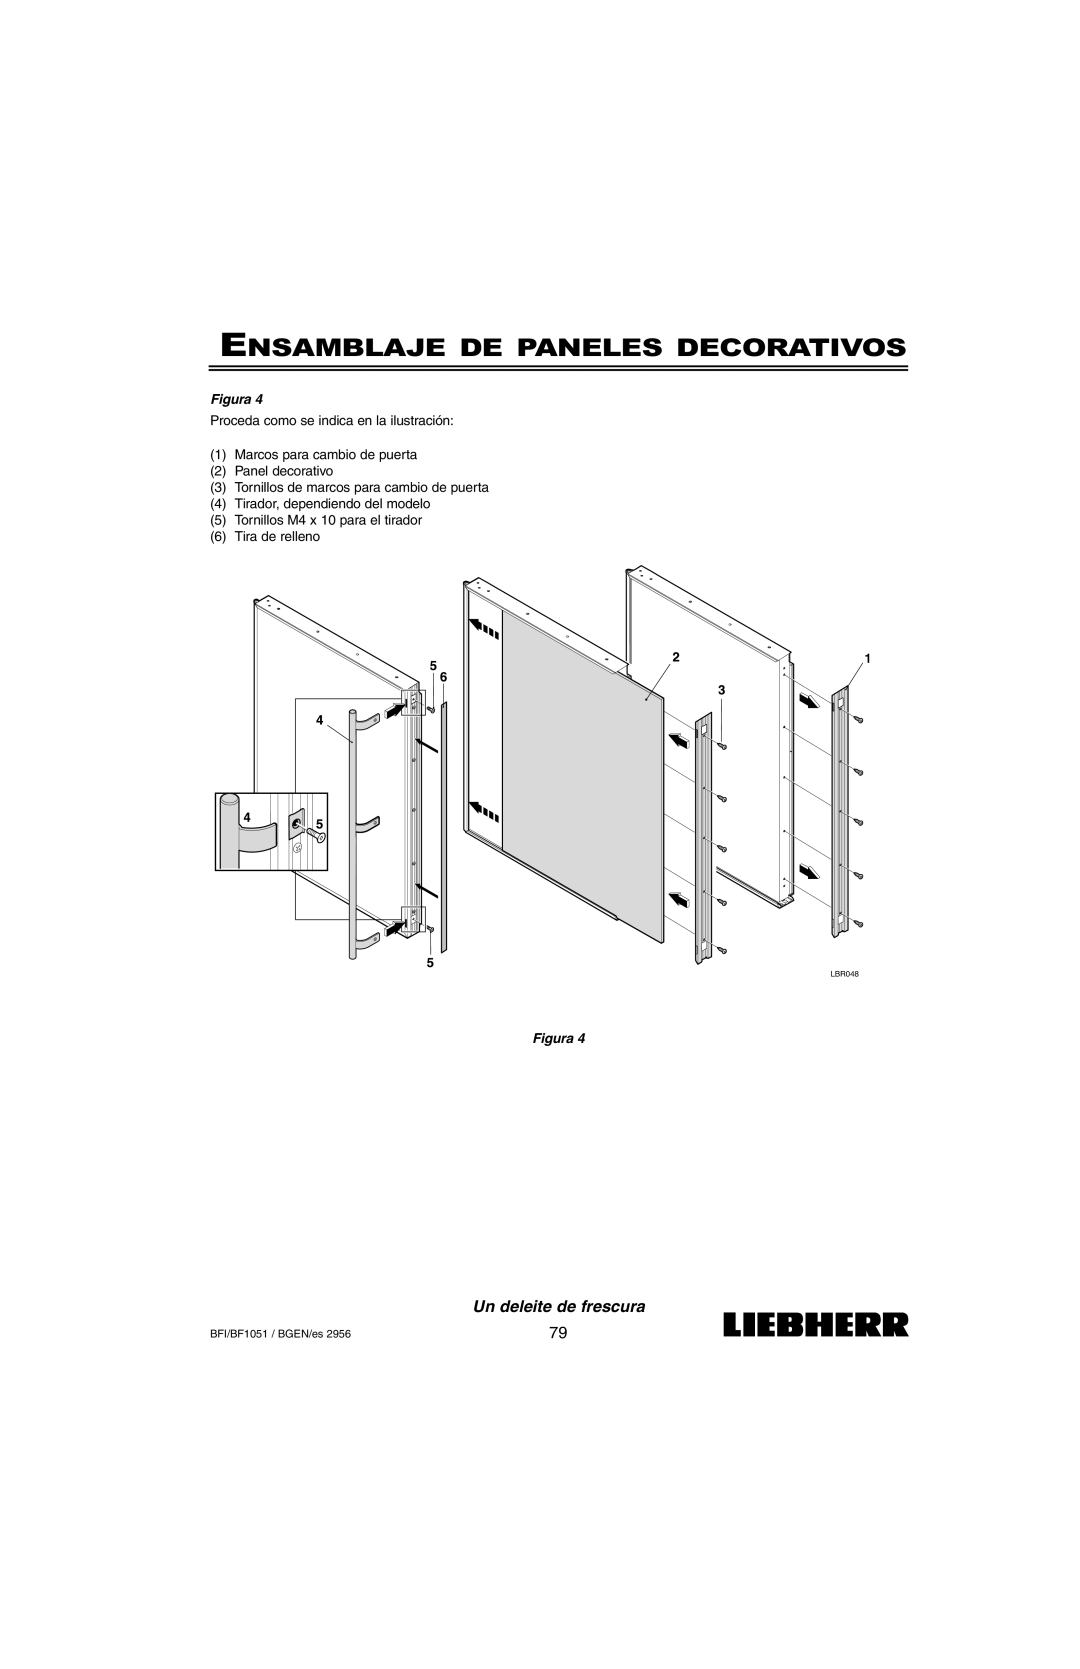 Liebherr BF1051, BFI1051 installation instructions Ensamblaje De Paneles Decorativos, Un deleite de frescura, Figura, LBR048 